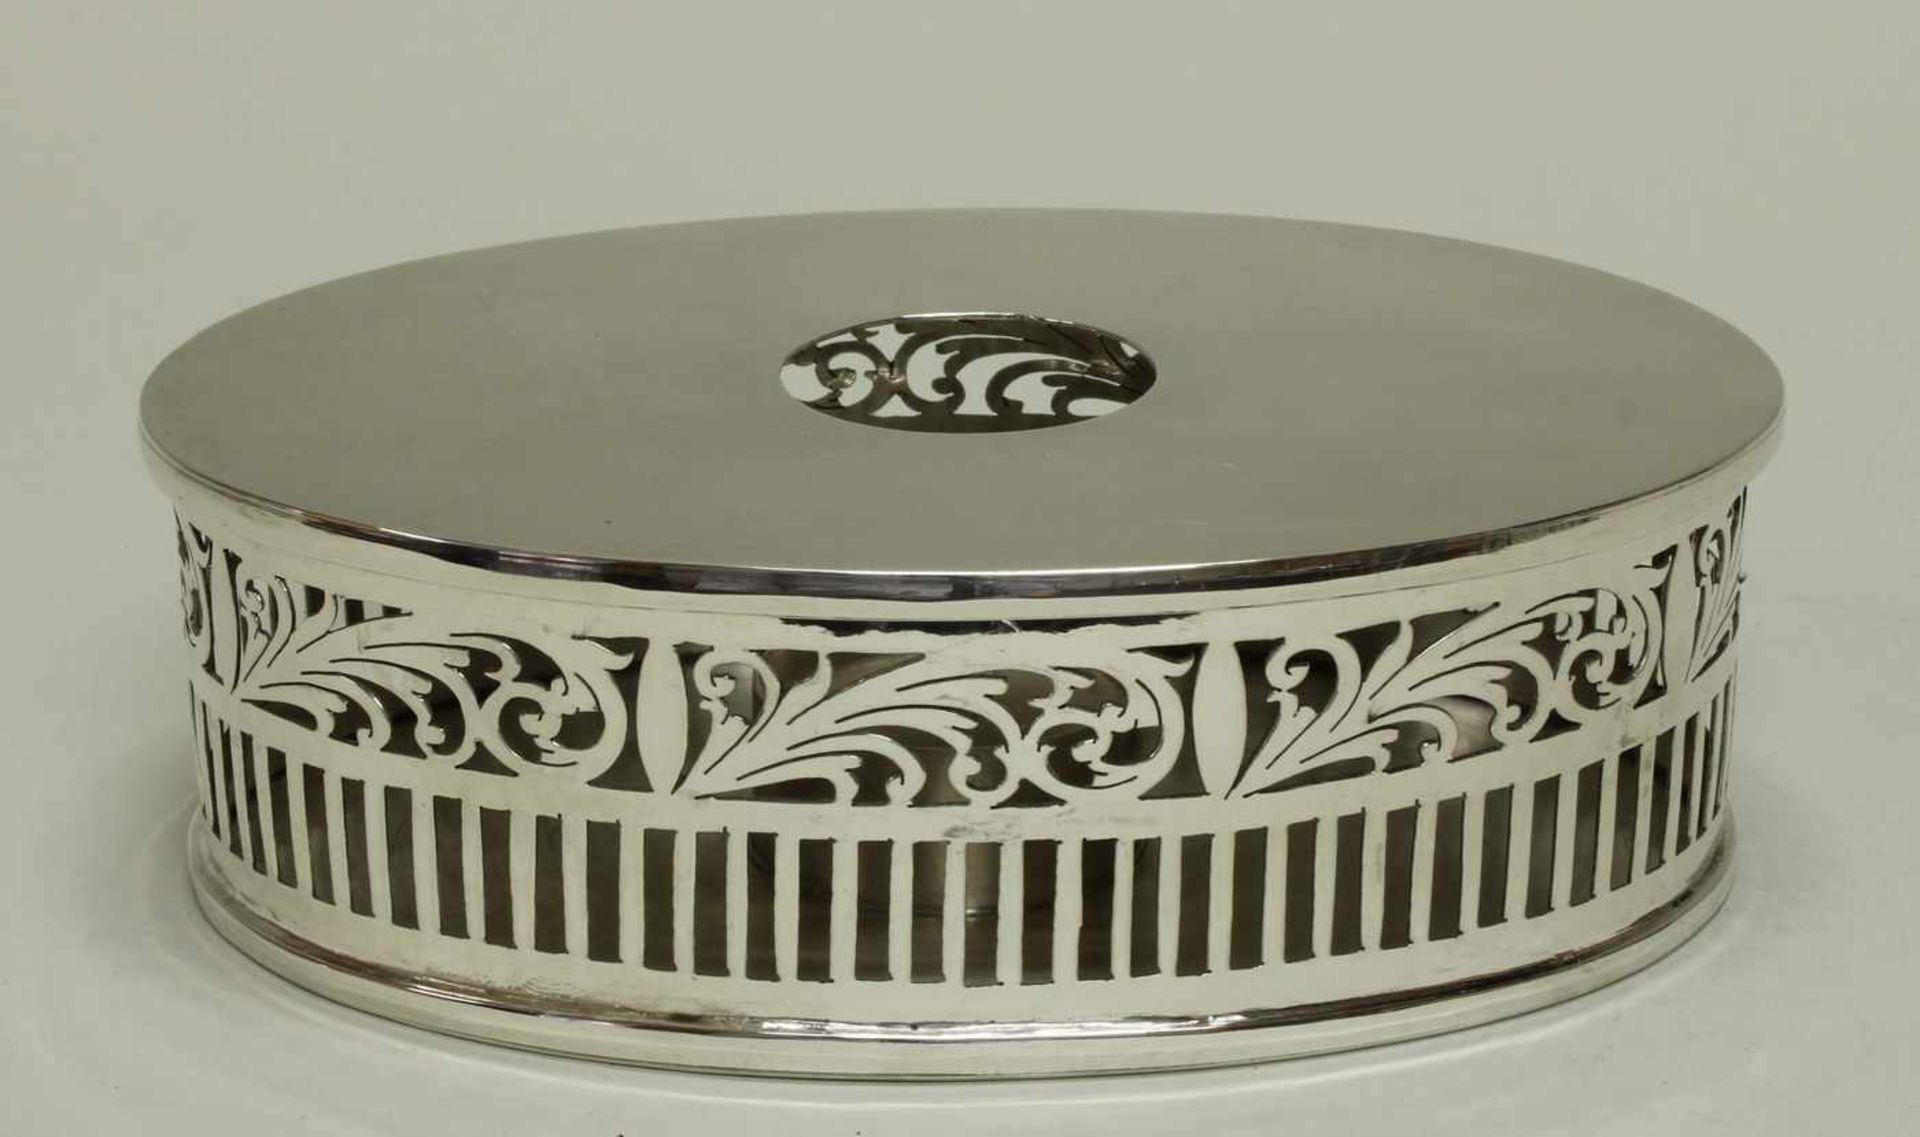 Stövchen, Silber 925, oval, durchbrochene Wandung mit Rankenzier, 5.5x 17.5 x 12 cm, ca. 482 g- - - - Image 2 of 2